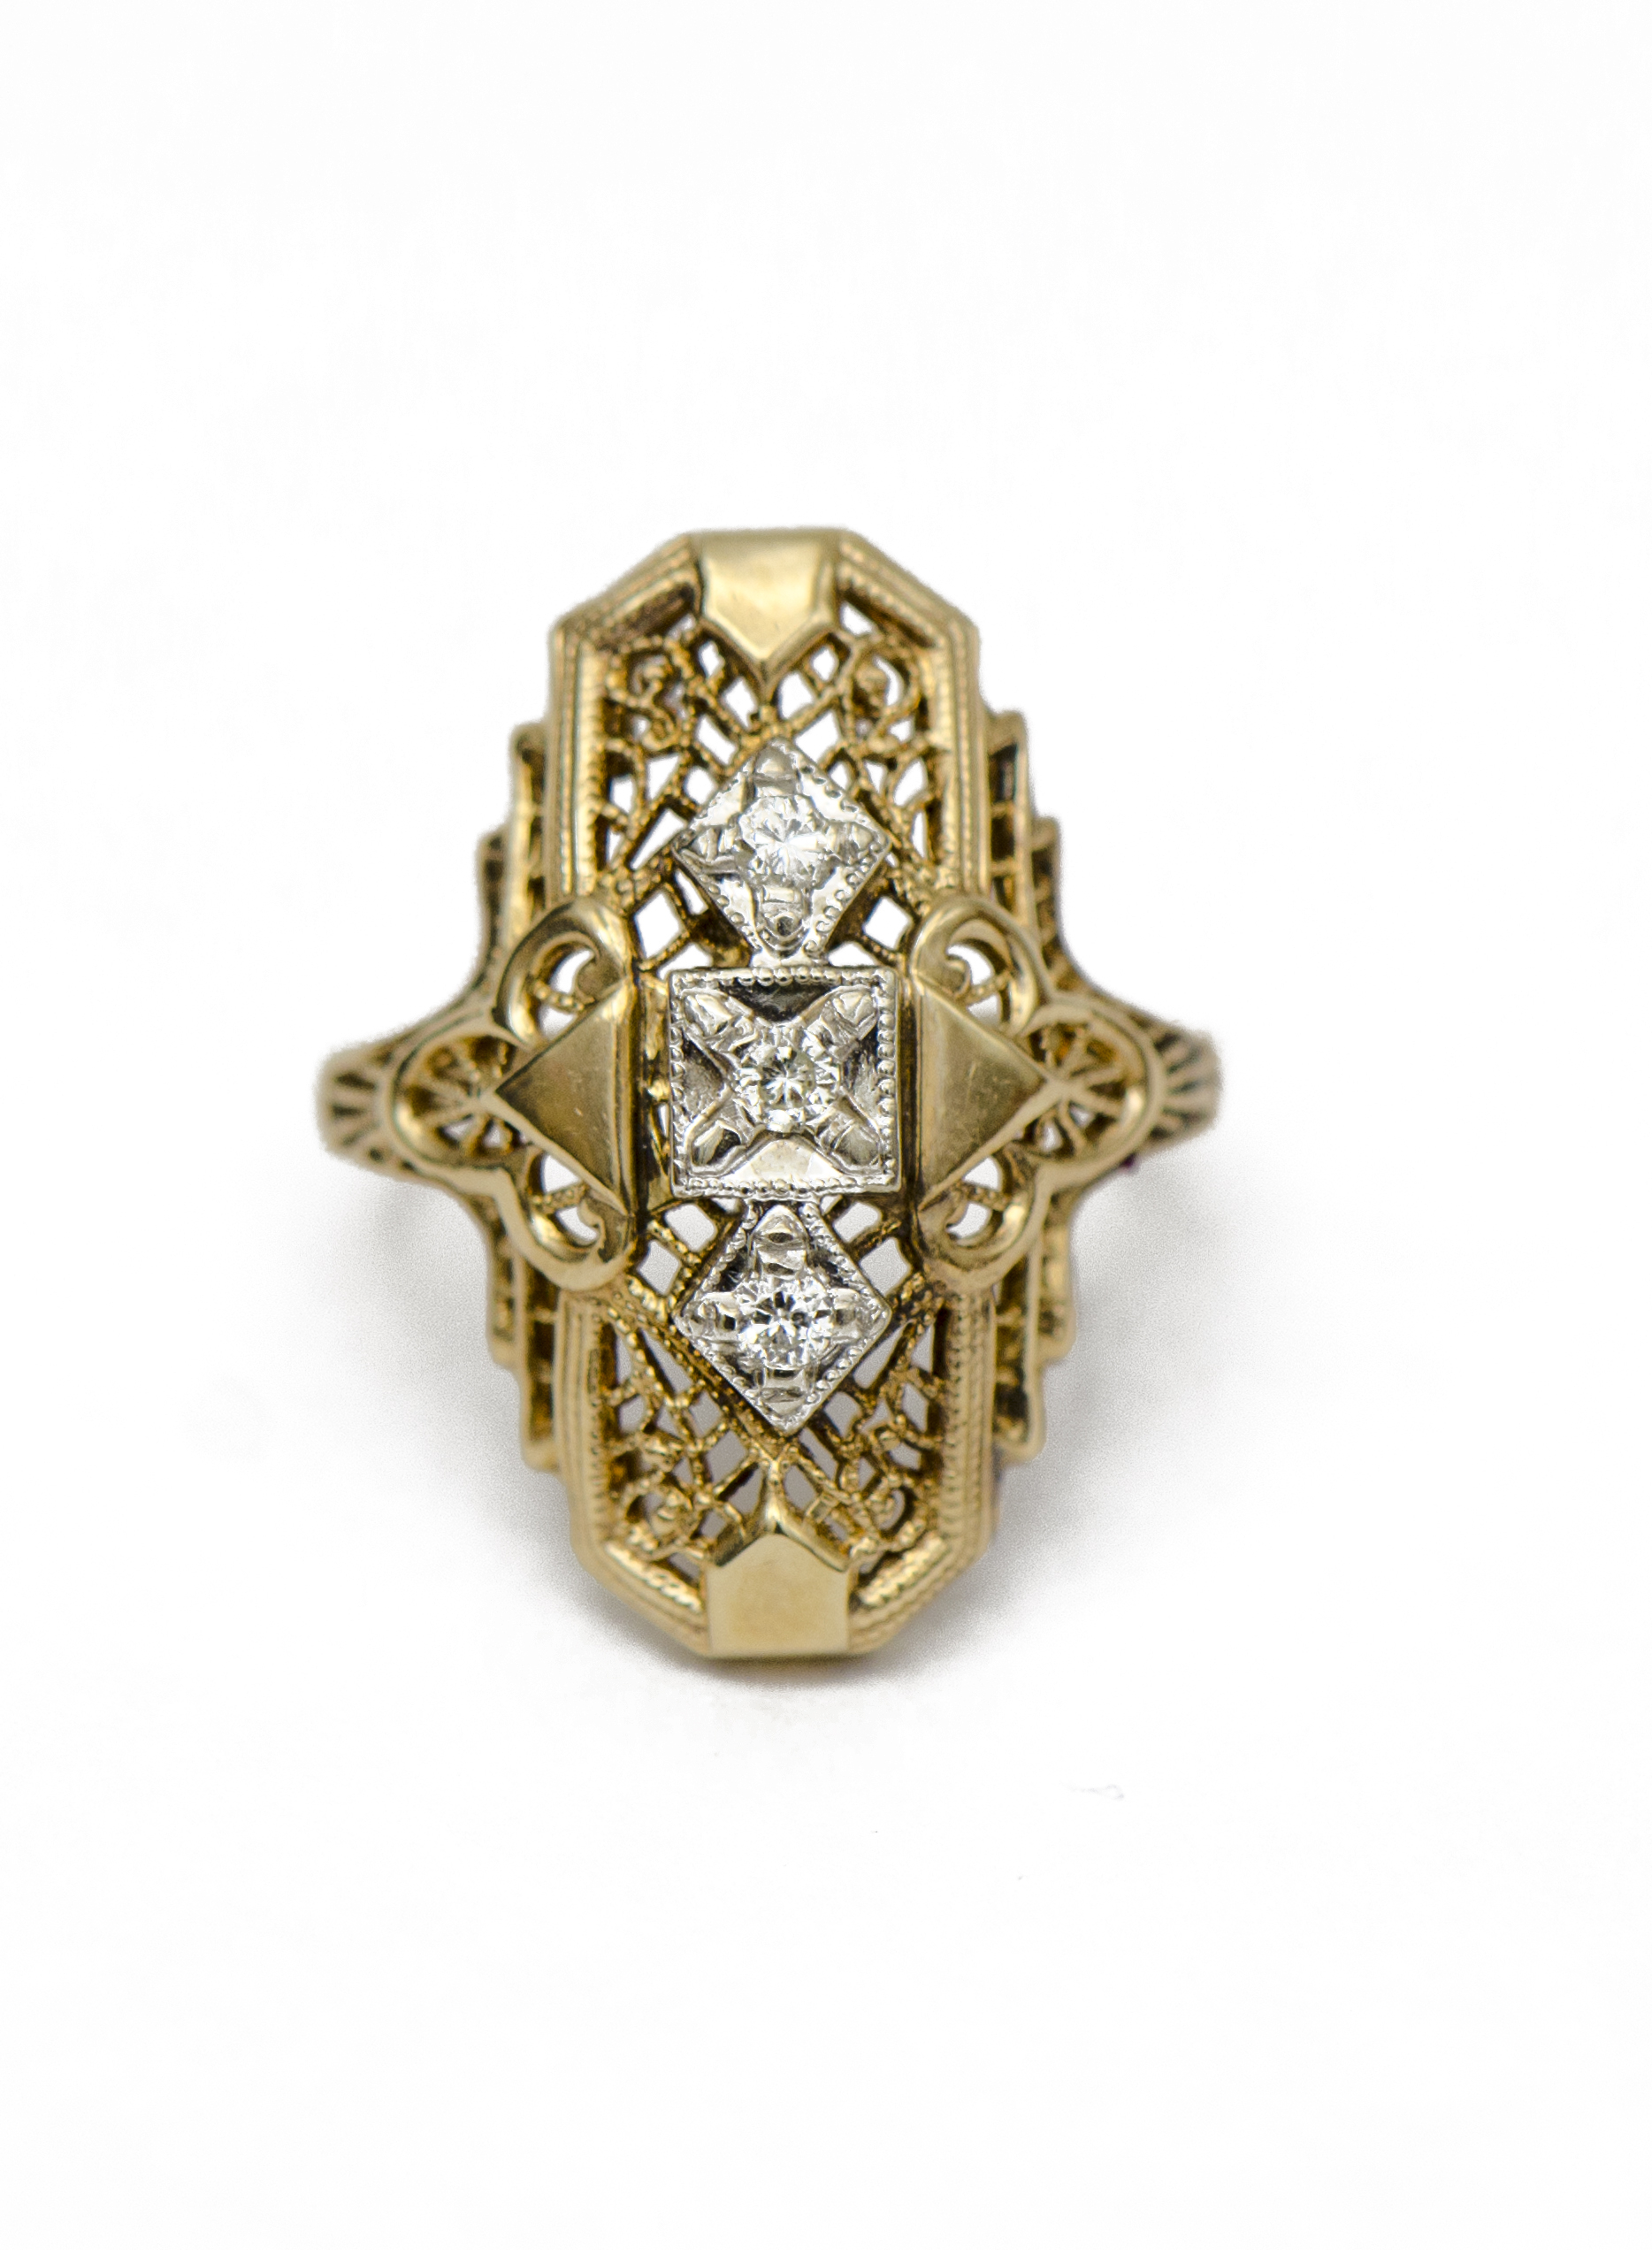 Vintage Gold Filigree Ring | Sandler's Diamonds & Time | Columbia SC